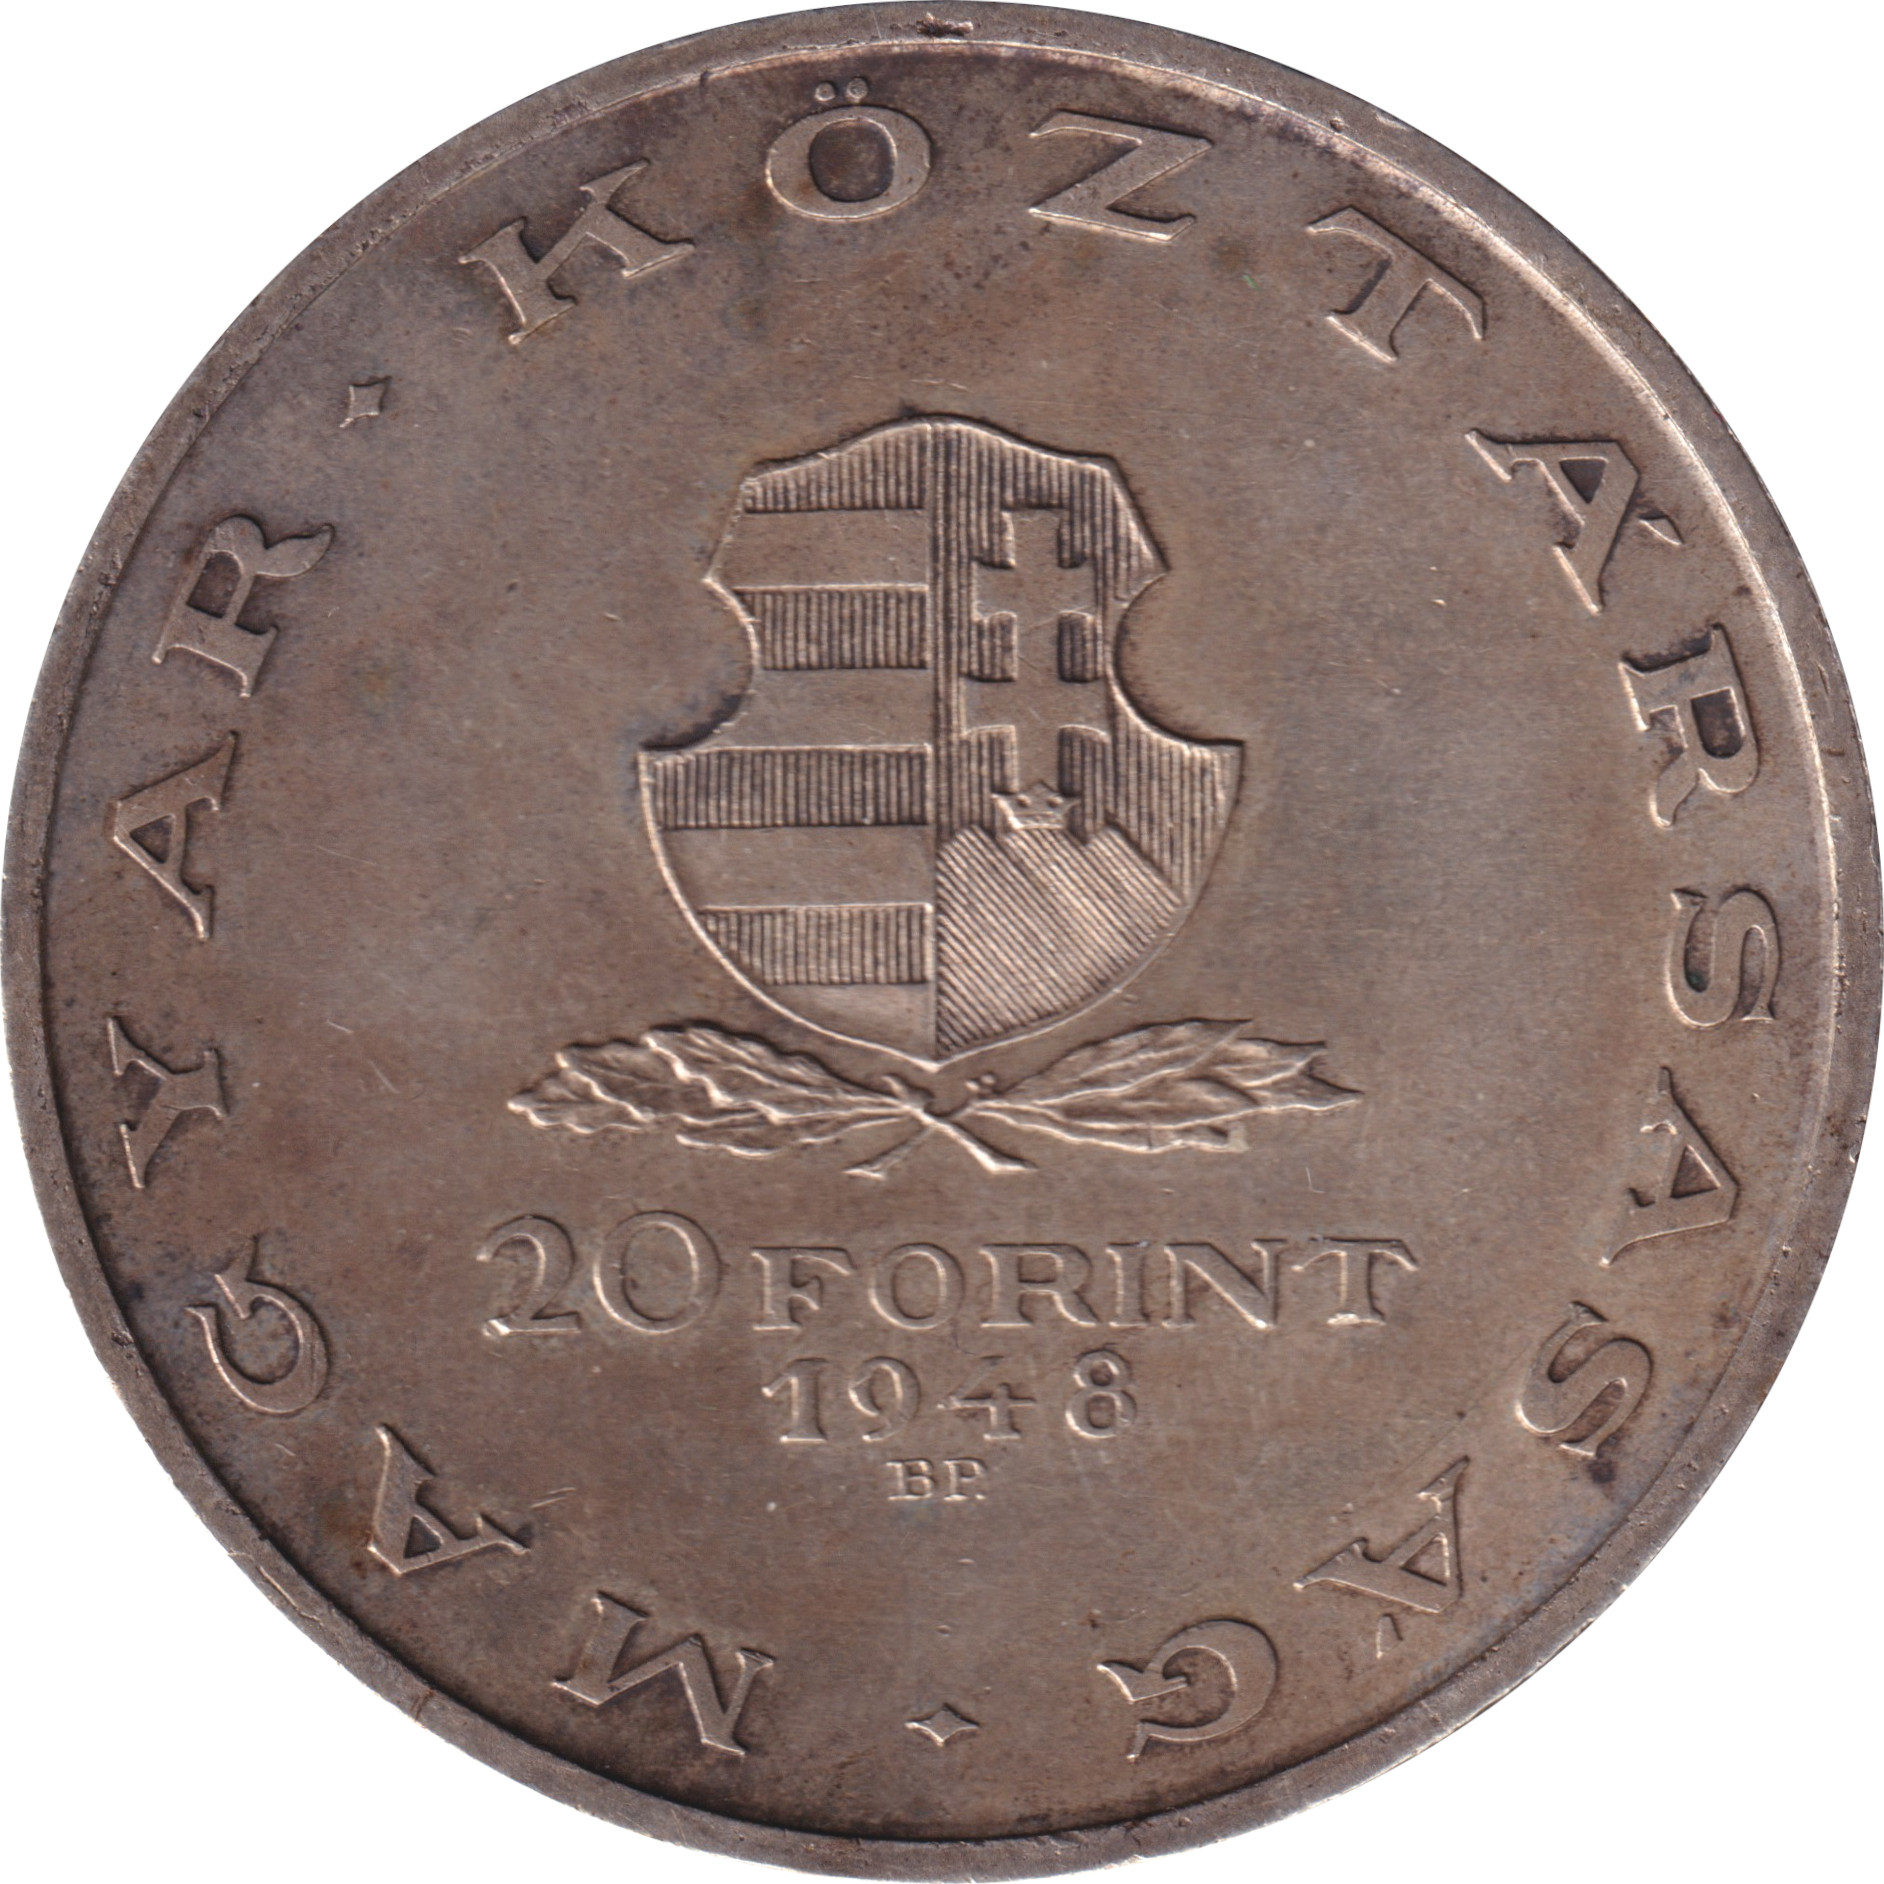 20 forint - Révolution - 100 years